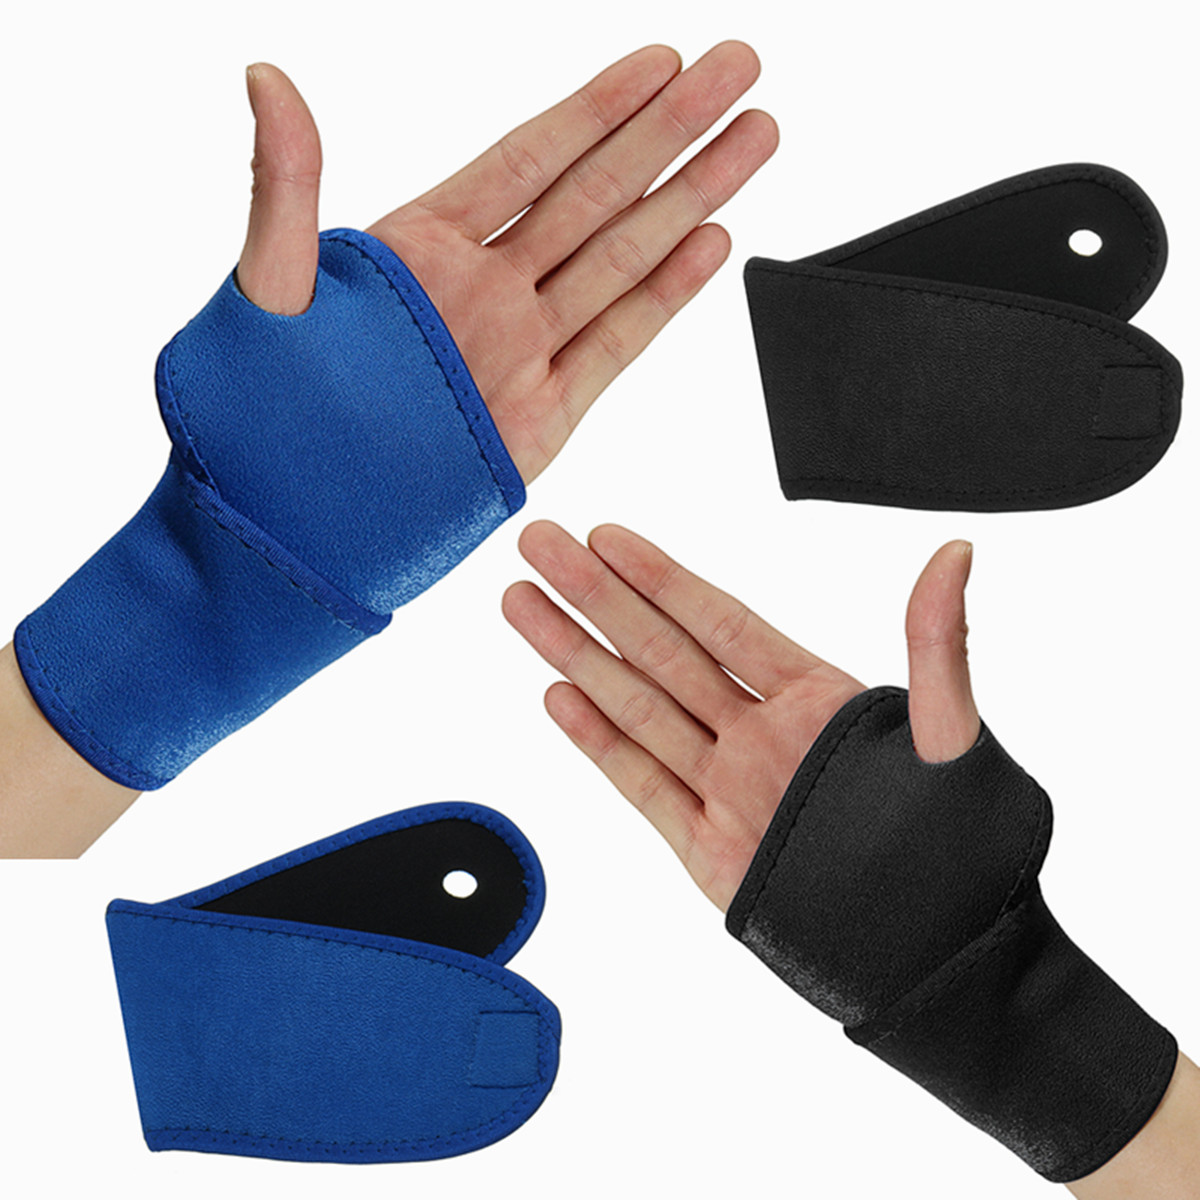 

Sports Adjustable Wrist Palm Wrap Guard Band Neoprene Brace Support Gym Sprain Strain Strap